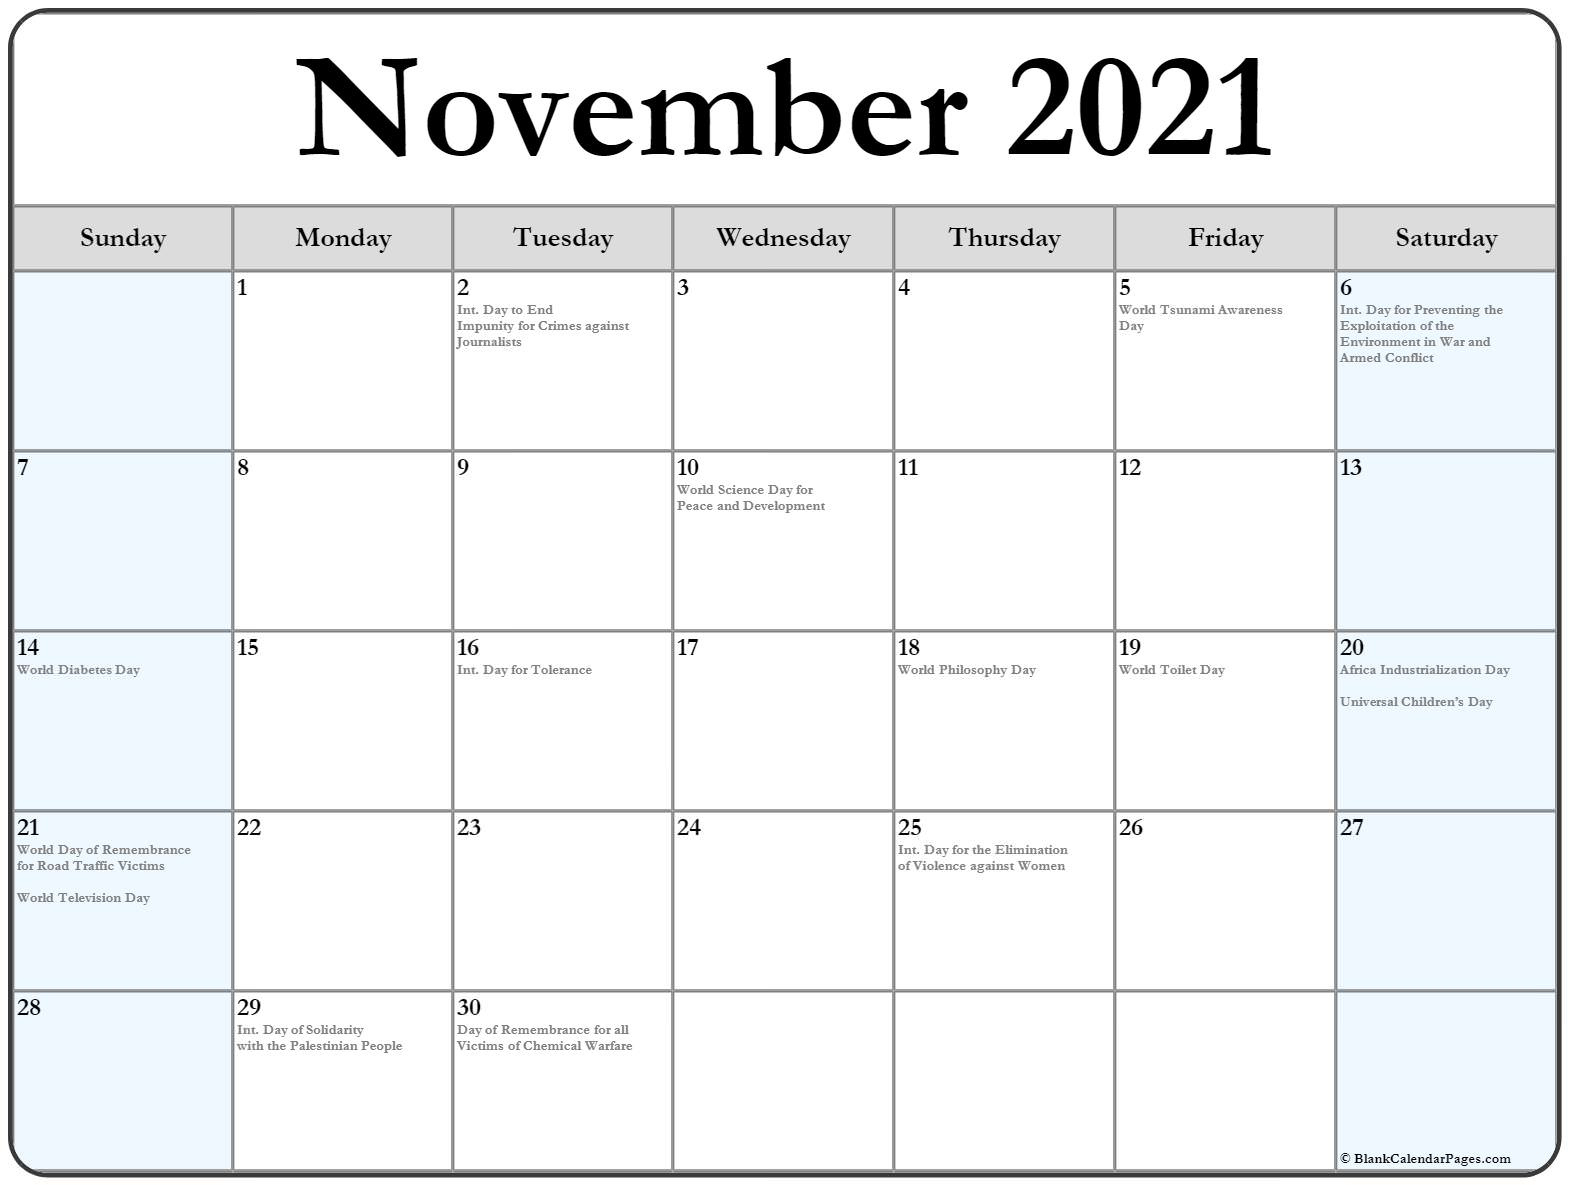 Collection Of November 2021 Calendars With Holidays November 2021 Calendar Xl